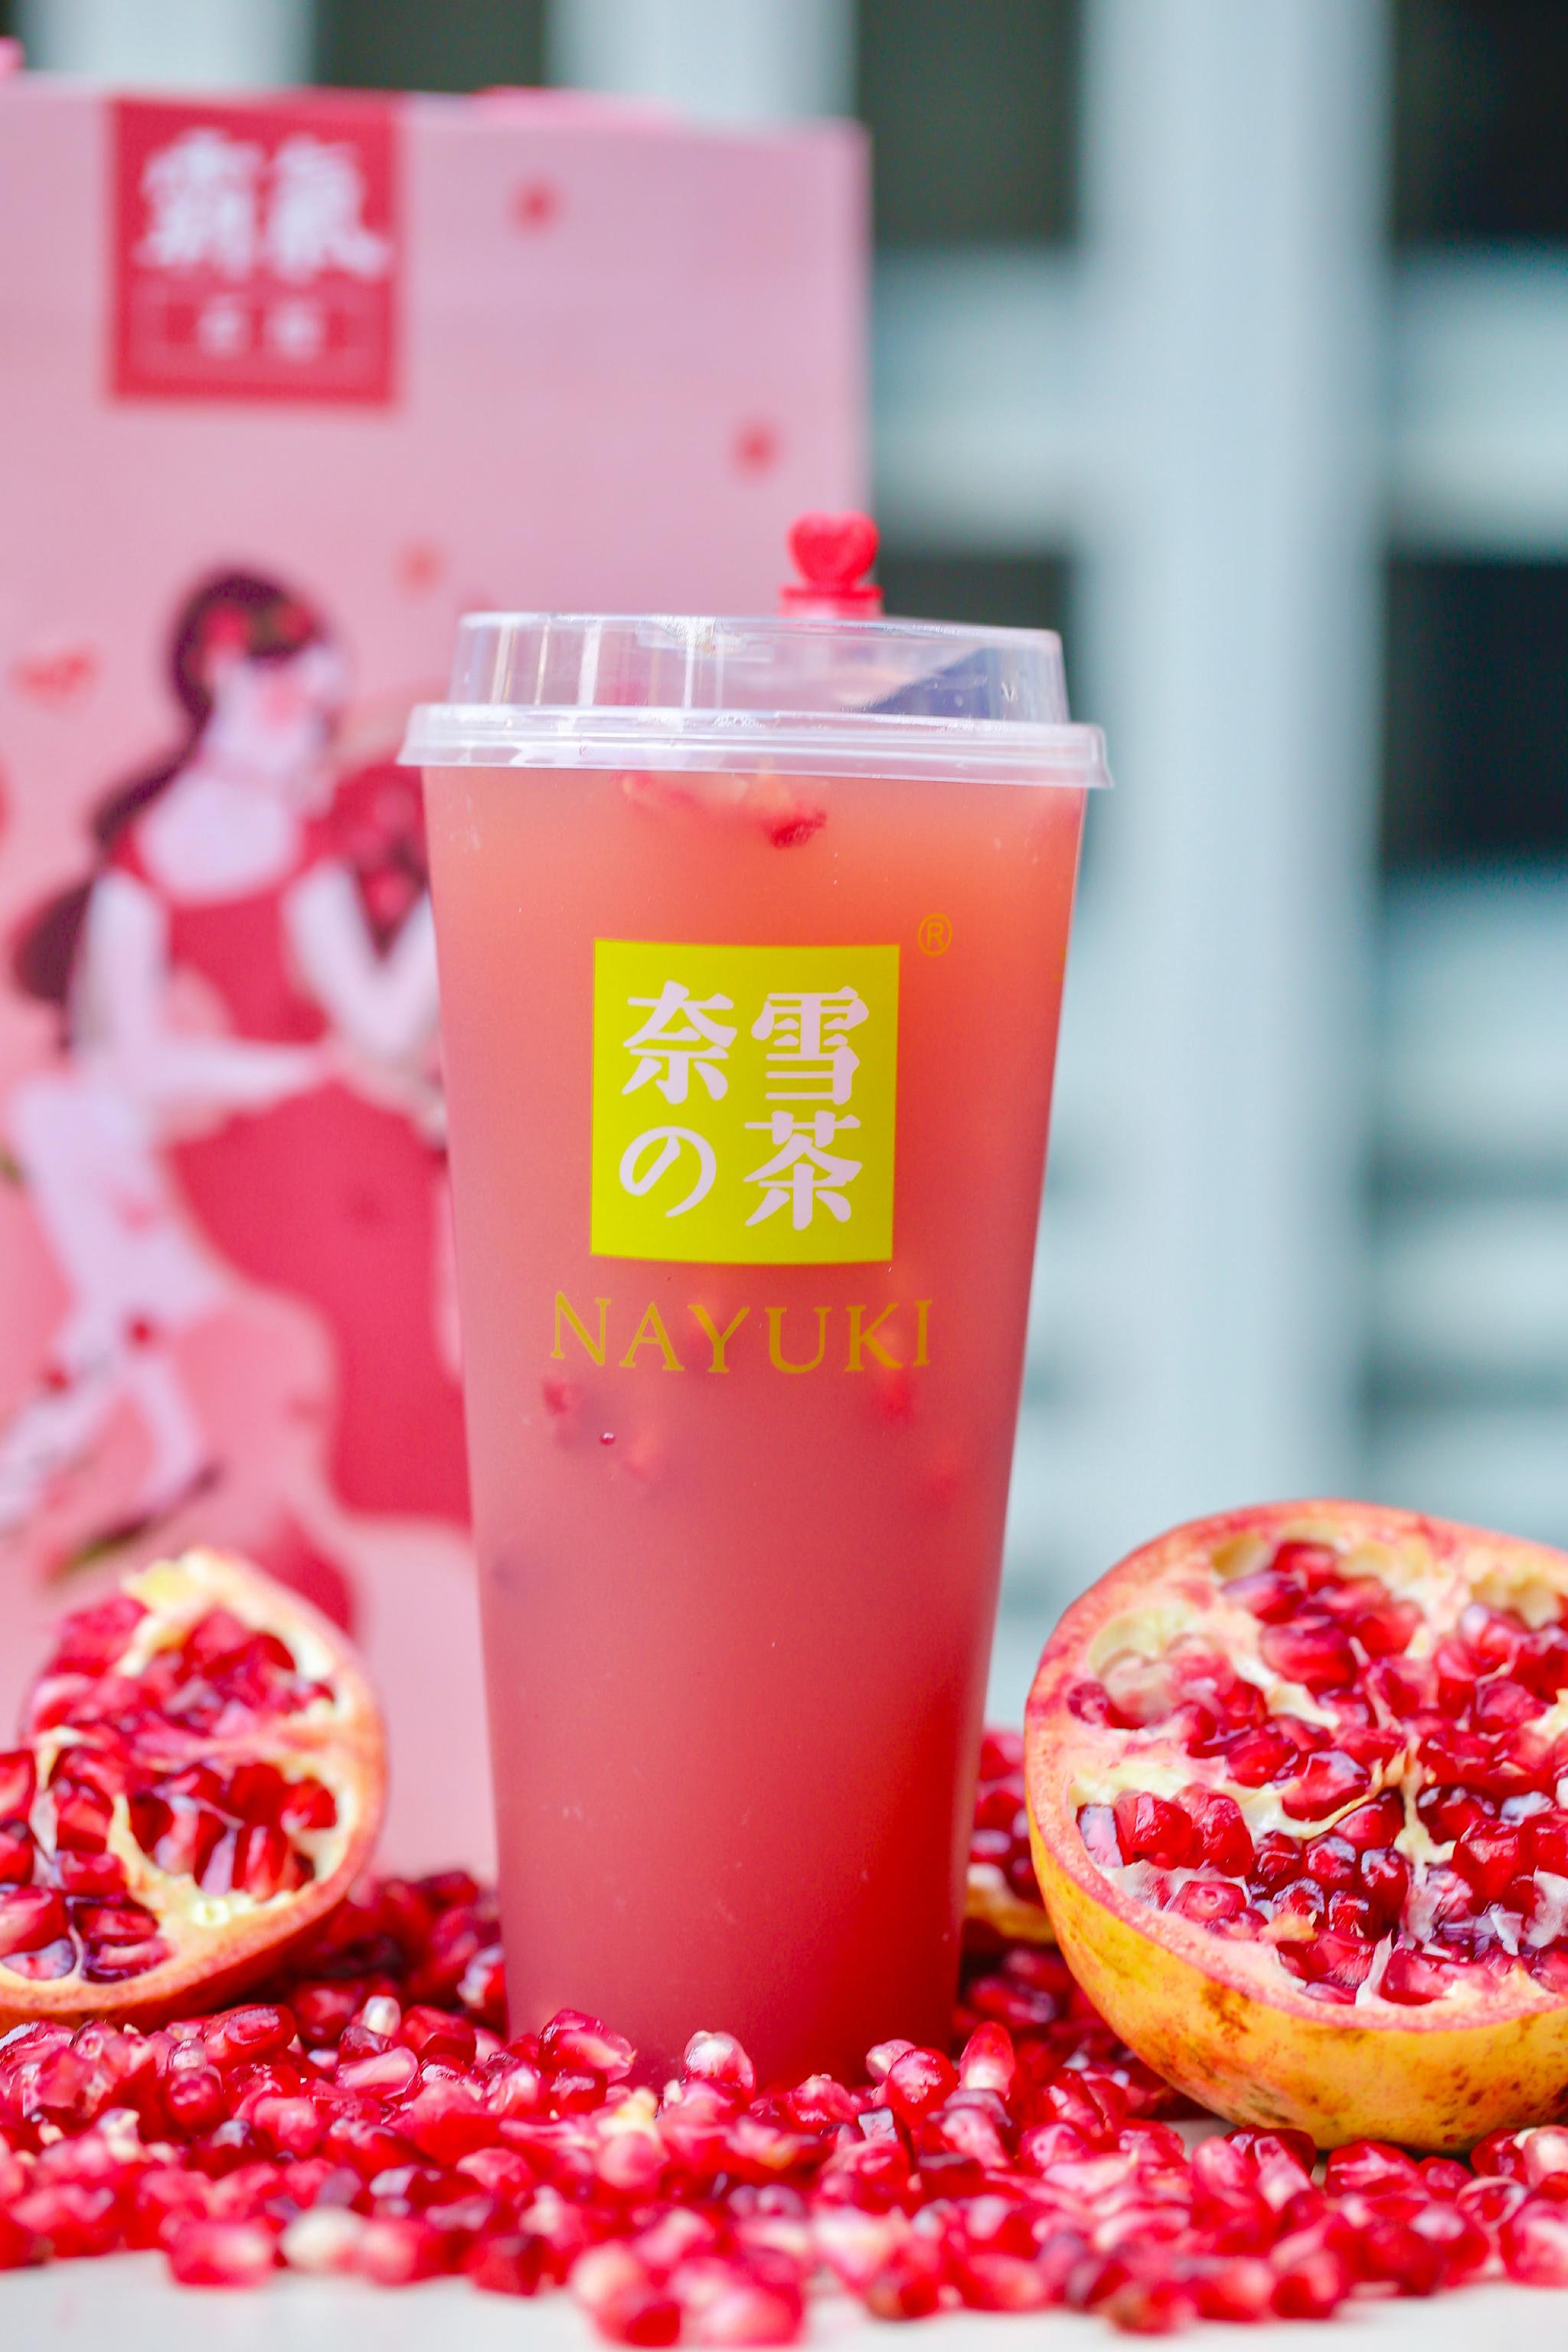 Guava Leaf Tea 红心番石榴叶茶 40g - GBT Trading Sdn Bhd